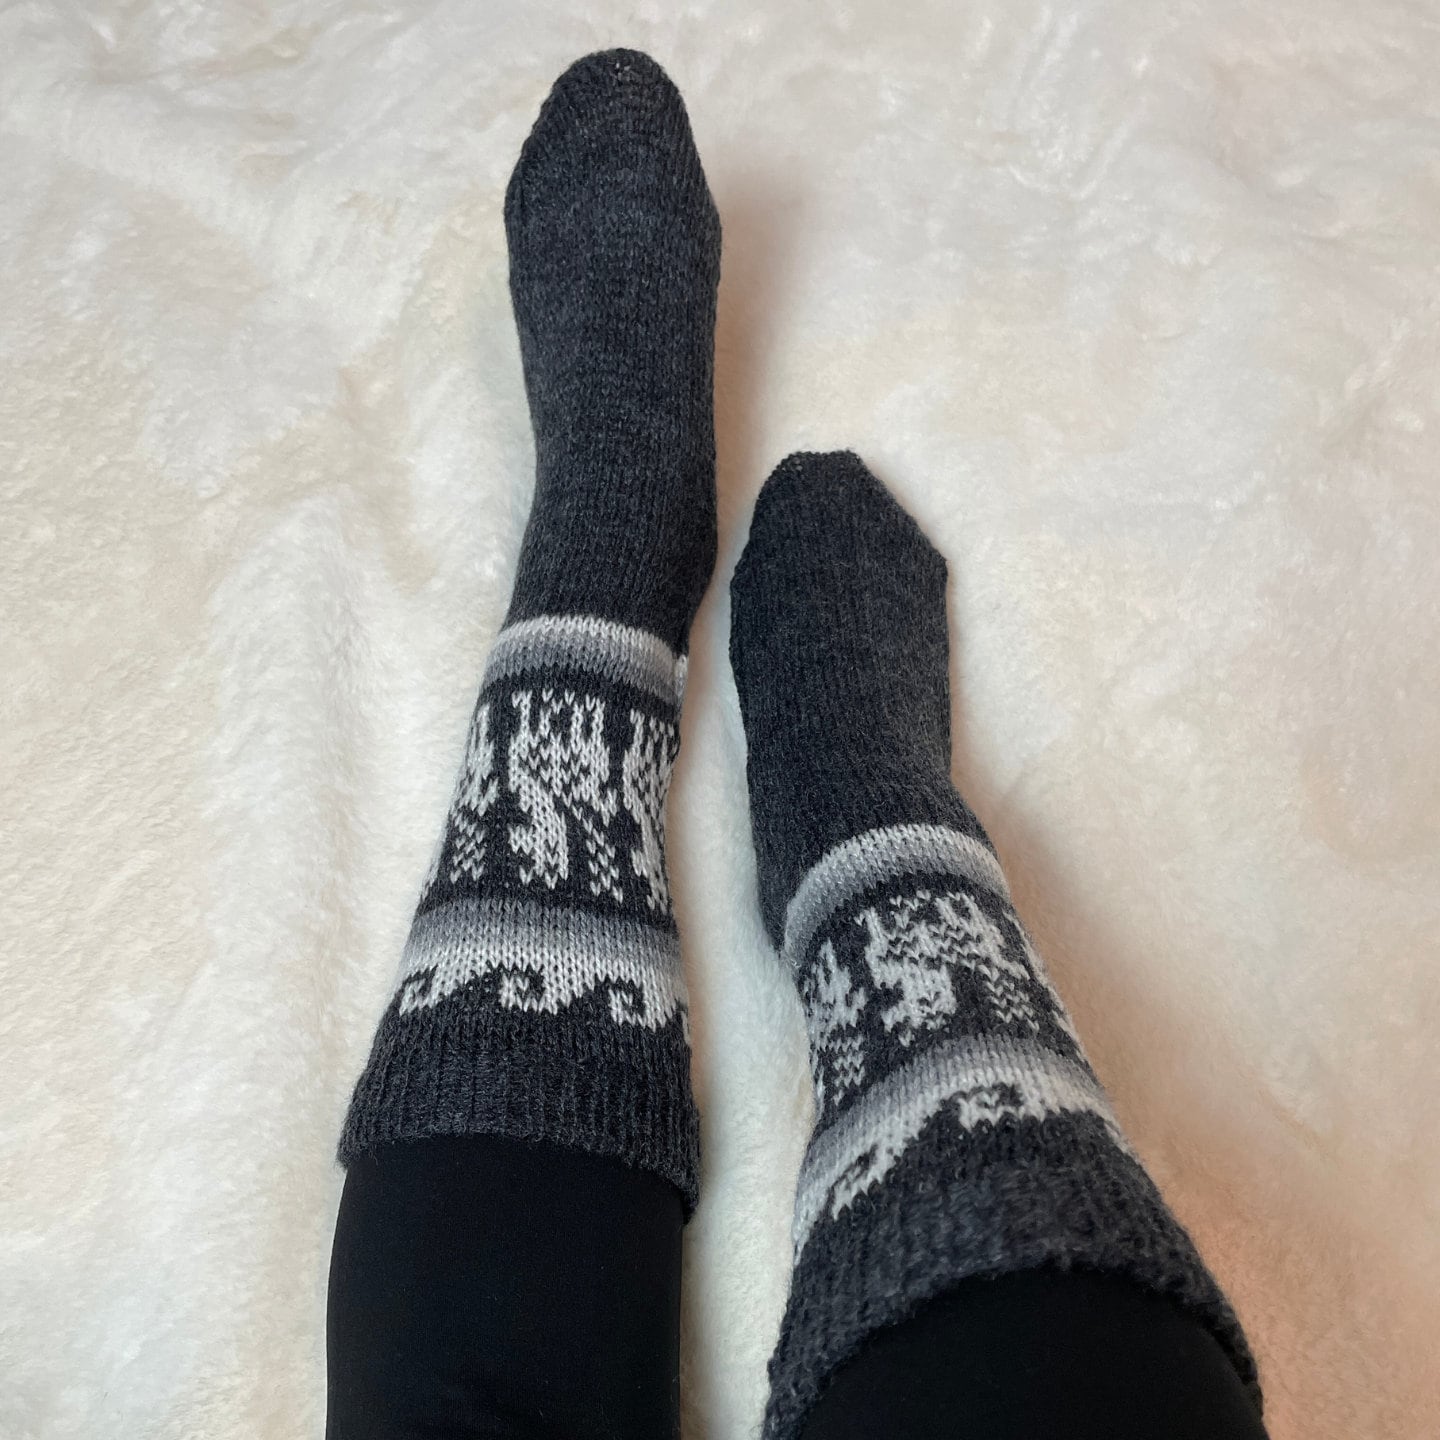 Warm Soft Winter Wool Neutral Colors Mid Calf Socks | Size 9-10 US Adult Socks